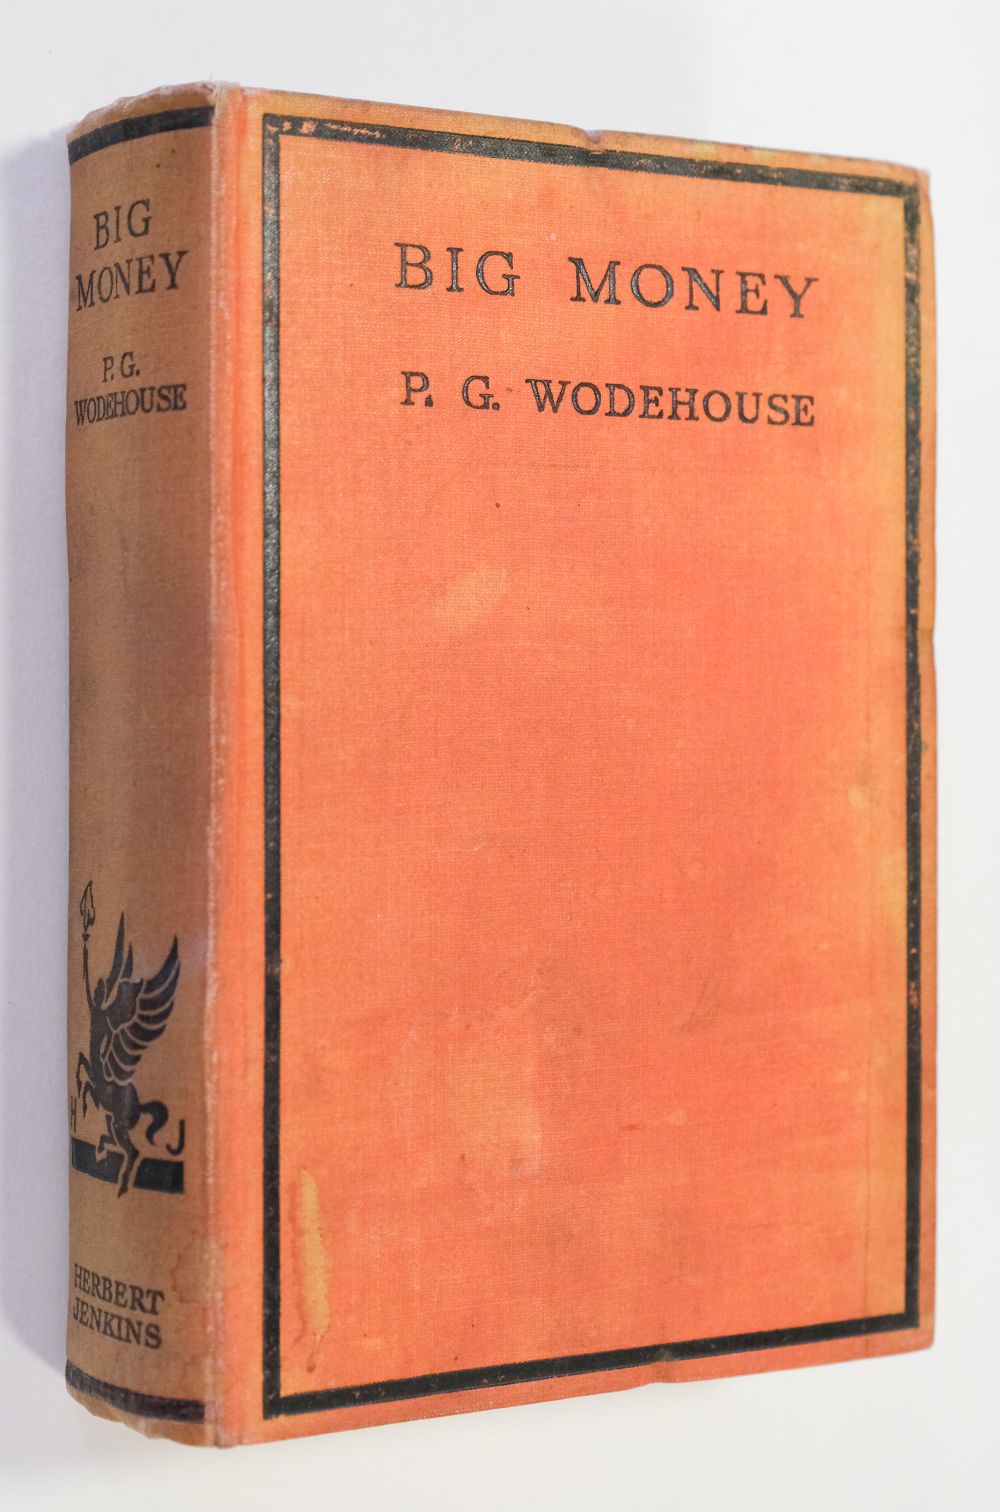 Wodehouse (P.G.) Big Money, 1st edition, 1931 - Image 4 of 15